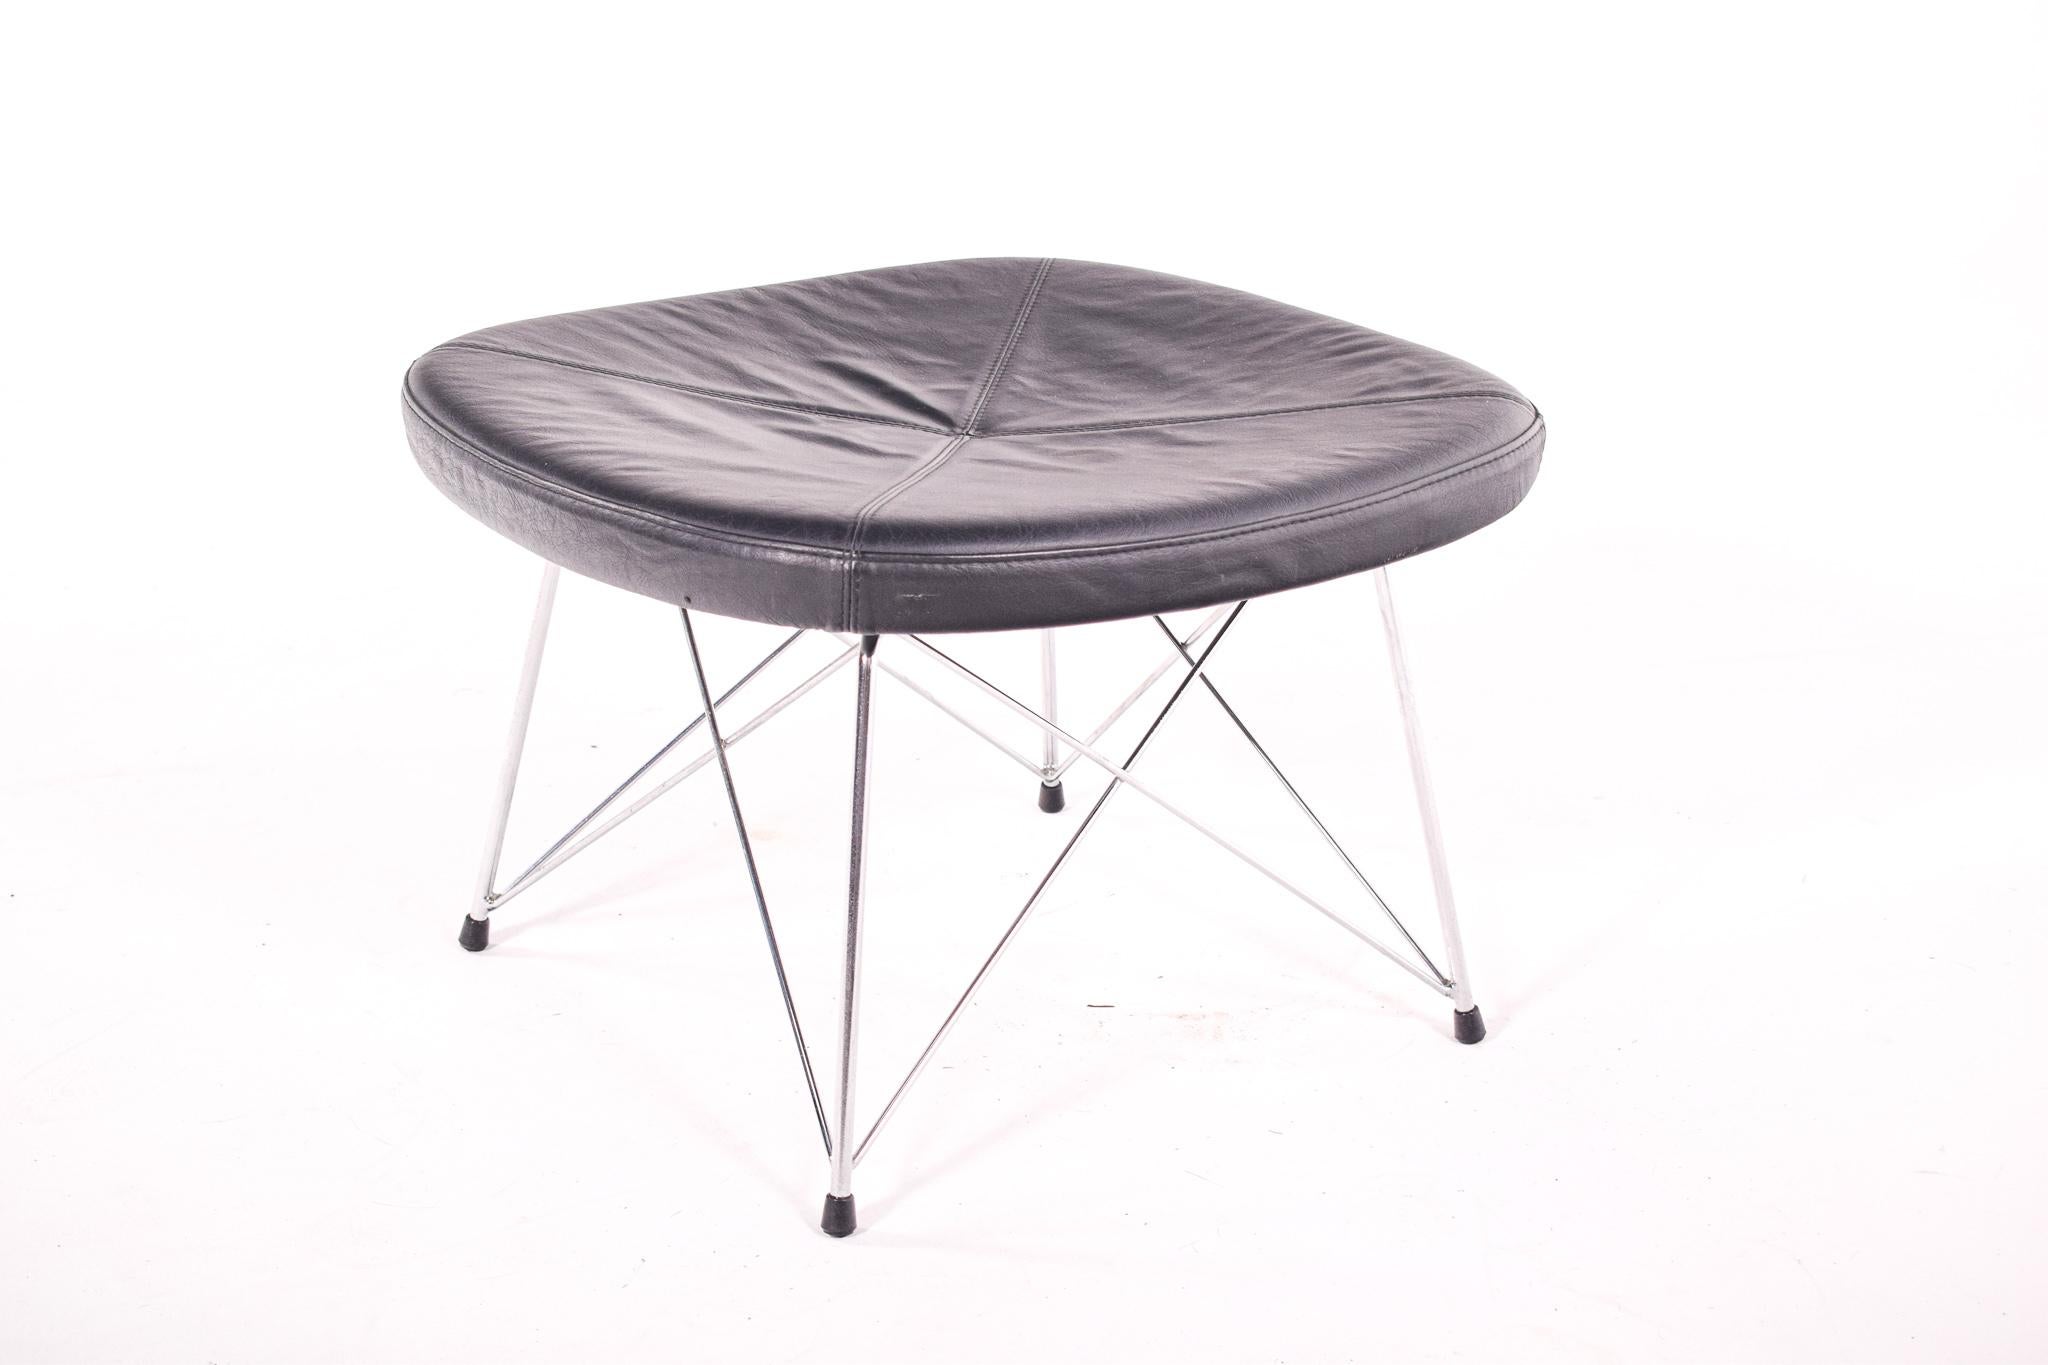 Elegant stool/bench, model EJ 141 designed by Morten Ernst & Anne Mette Jensen for Erik Jørgensen, Denmark. It's a bench with legs made of chrome-plated and upholstered seat in black leather.